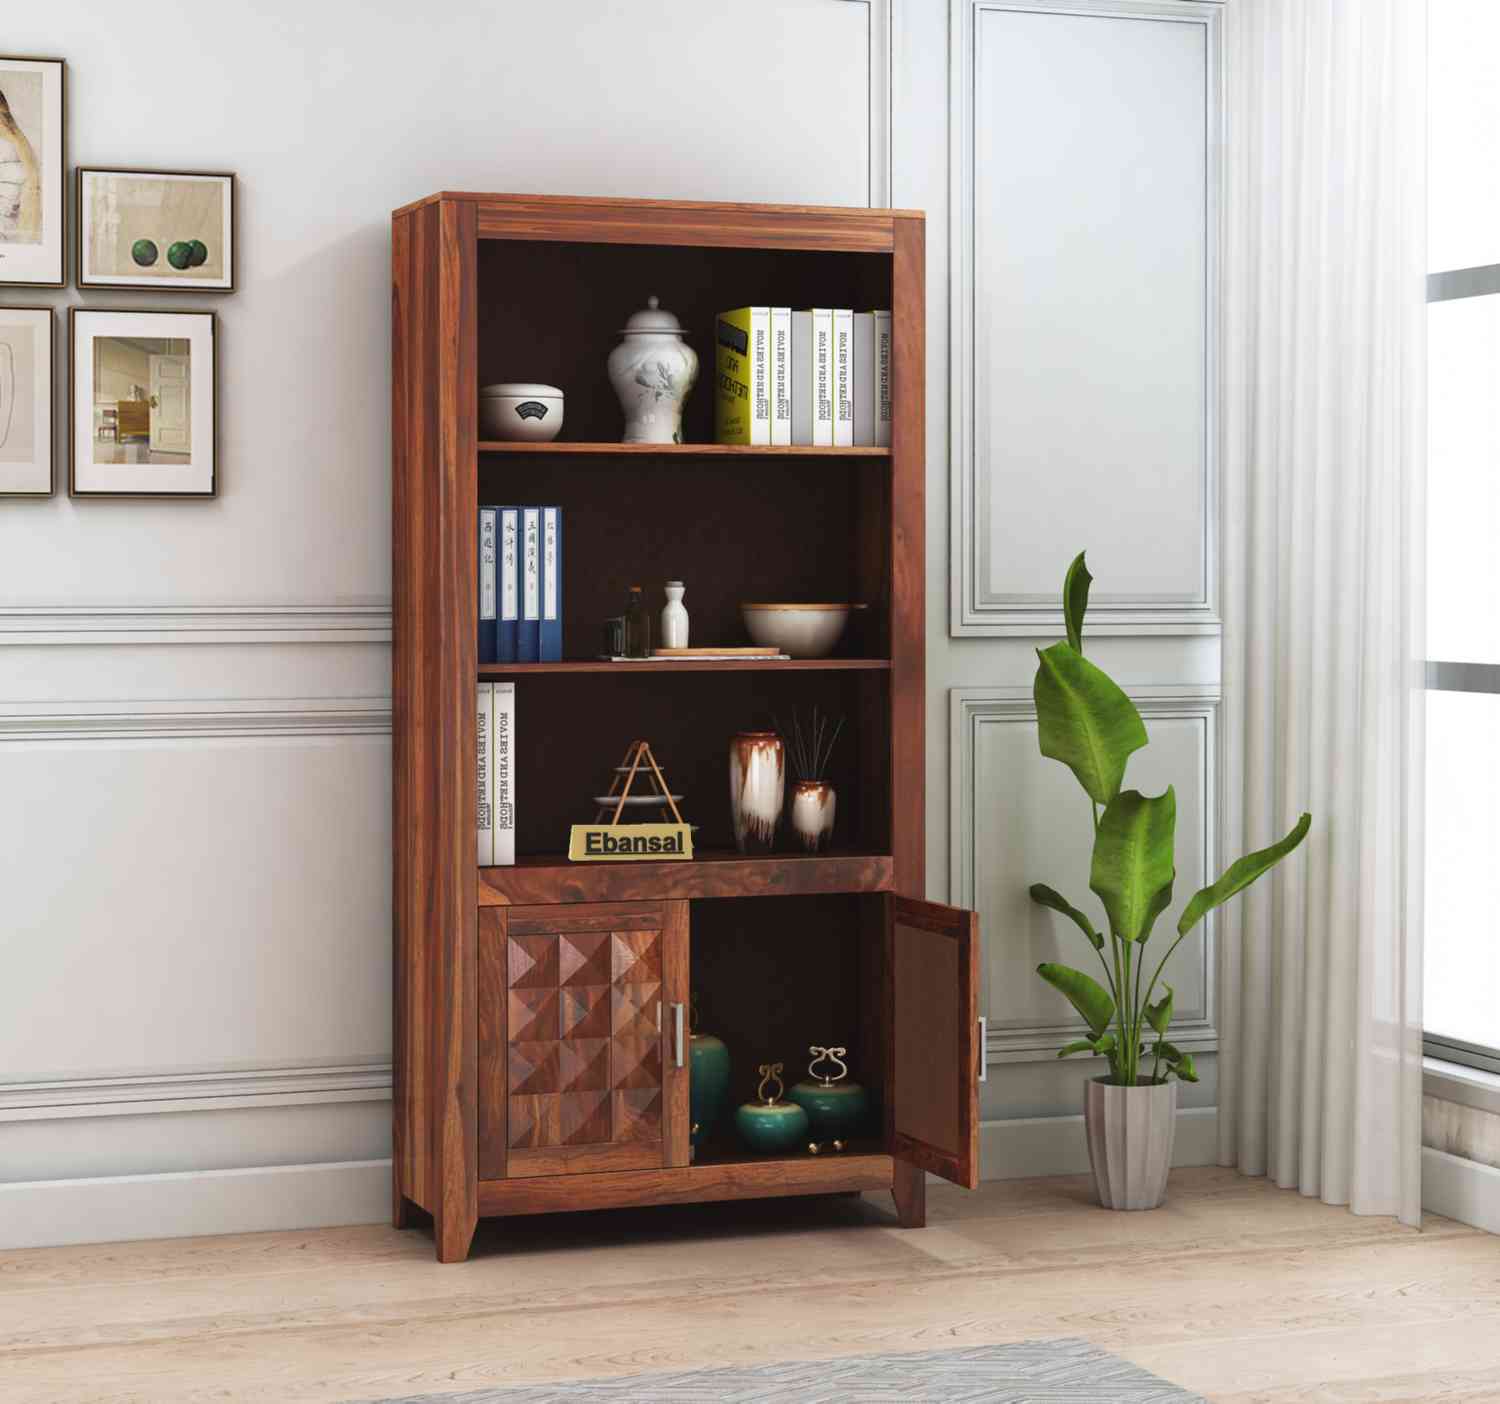 Sofia Solid Sheesham Wood Bookshelf (Natural Finish)